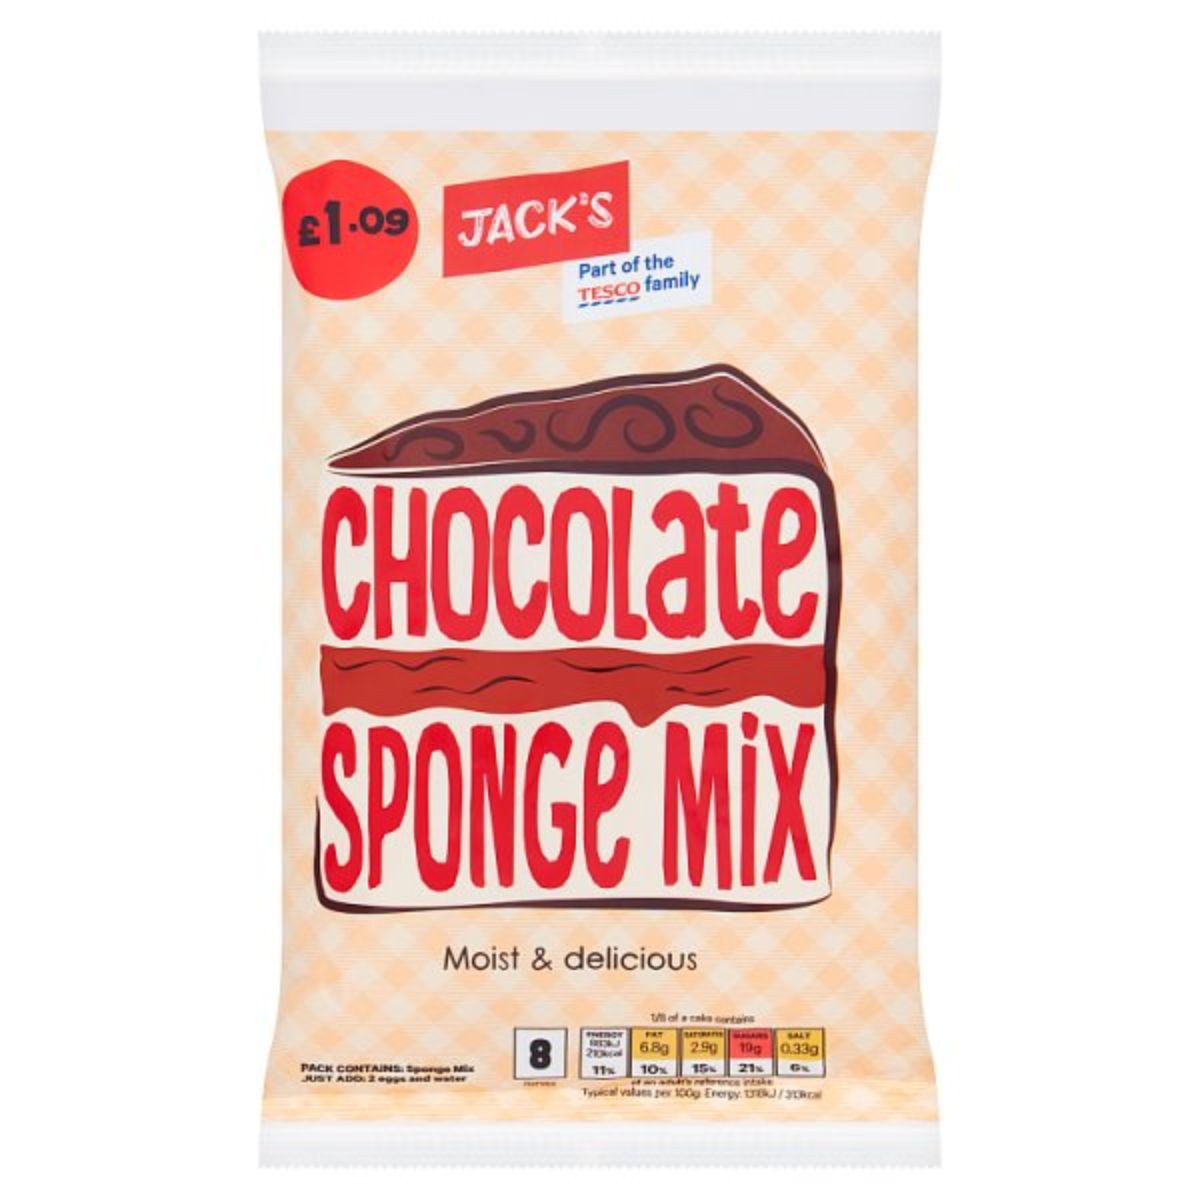 Jacks - Chocolate Sponge Mix - 400g.